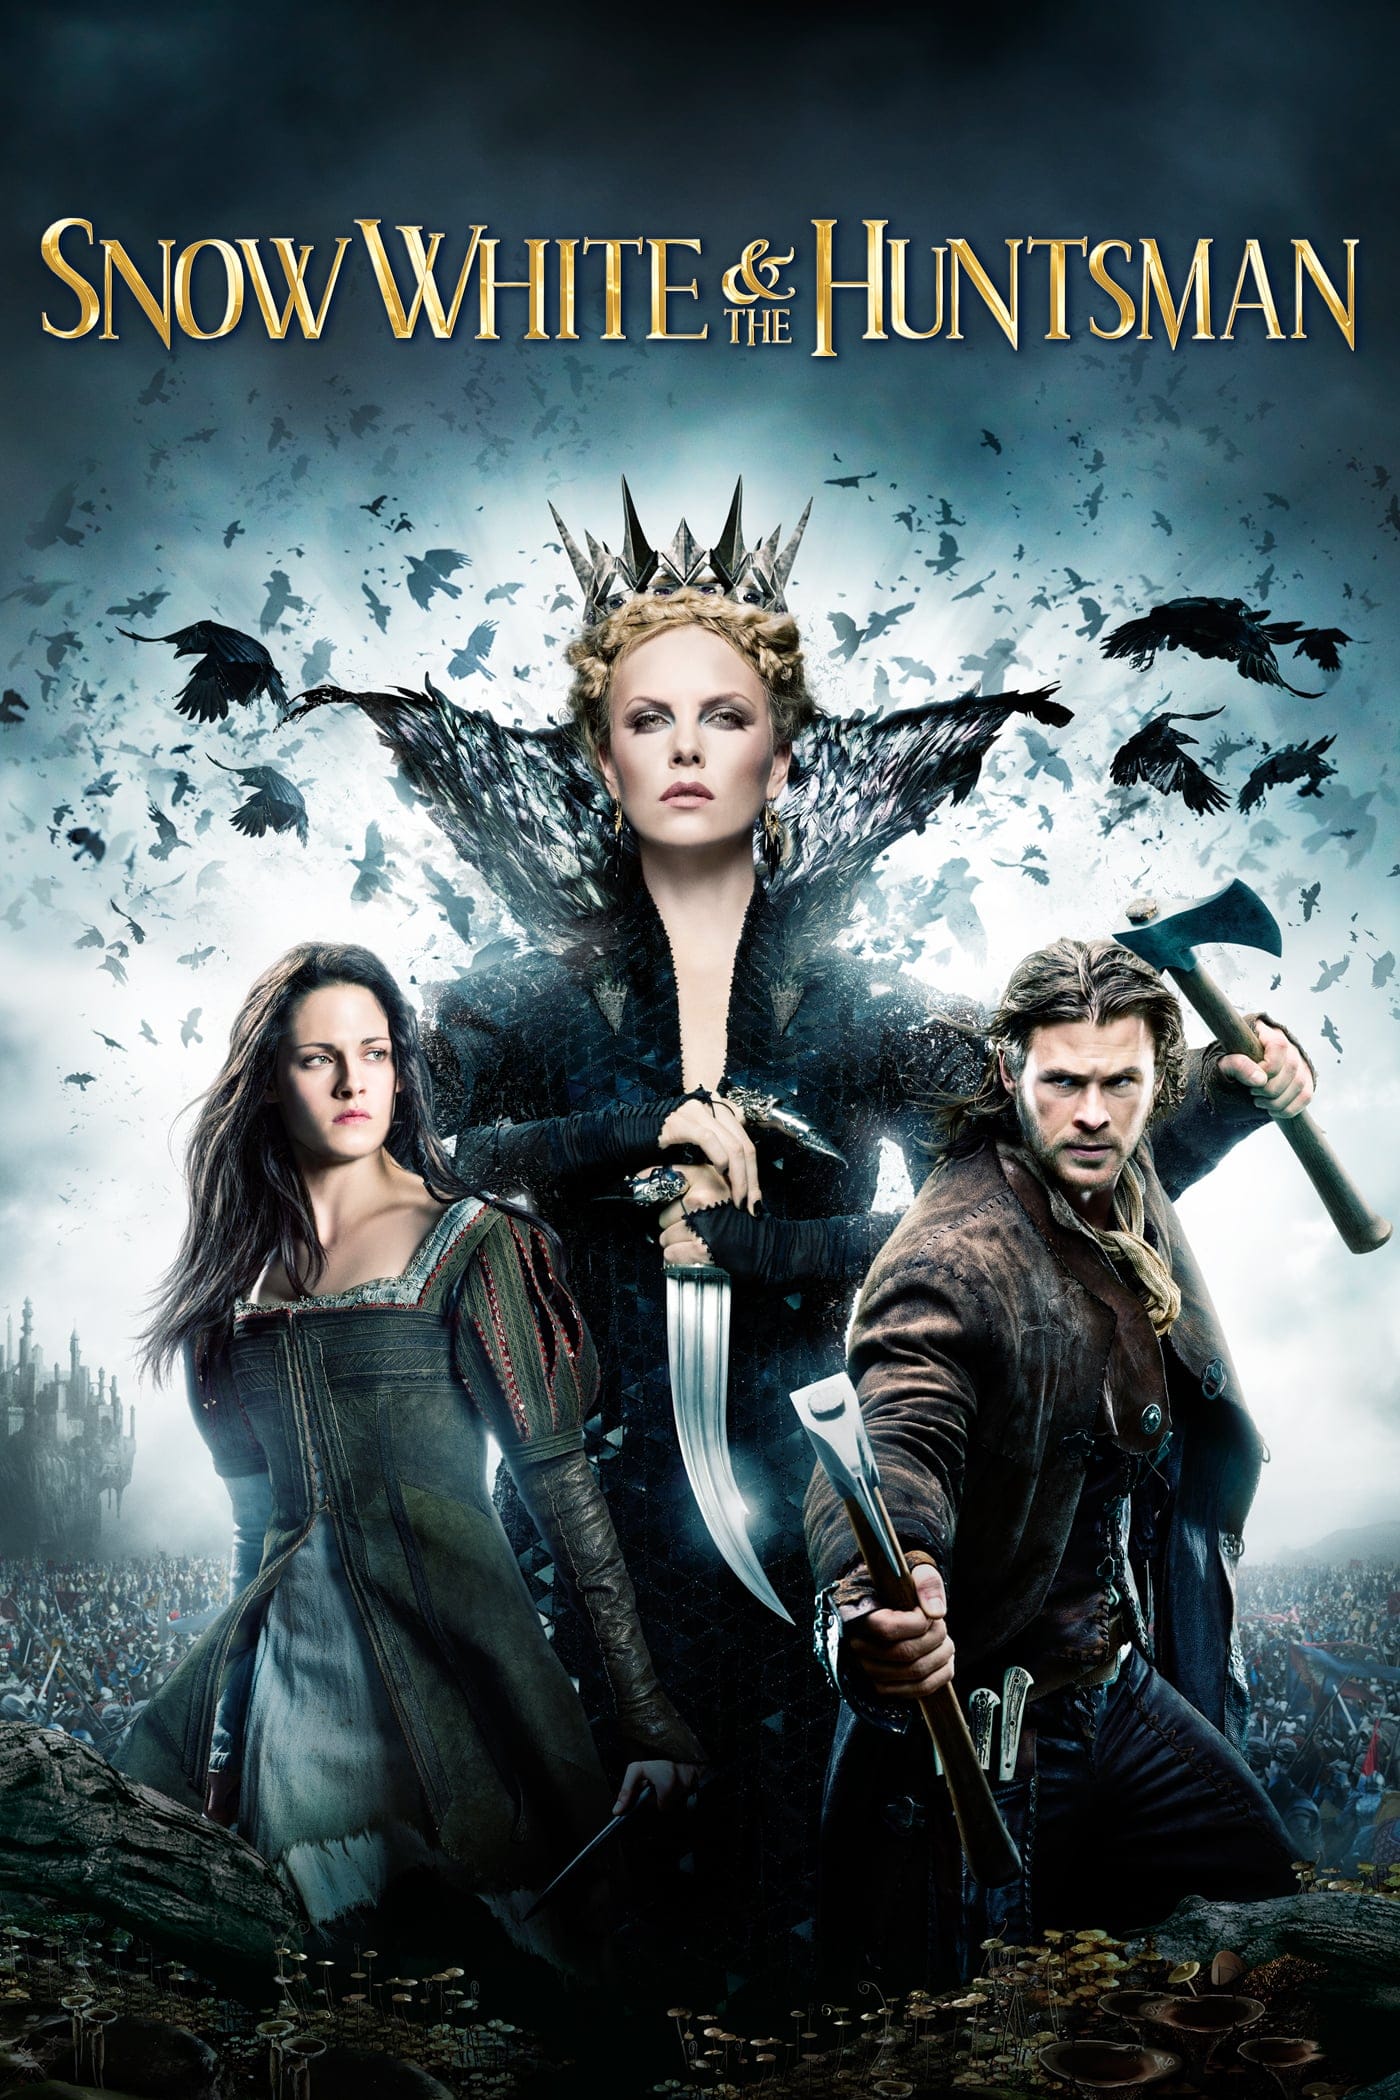 Plakat von "Snow White and the Huntsman"